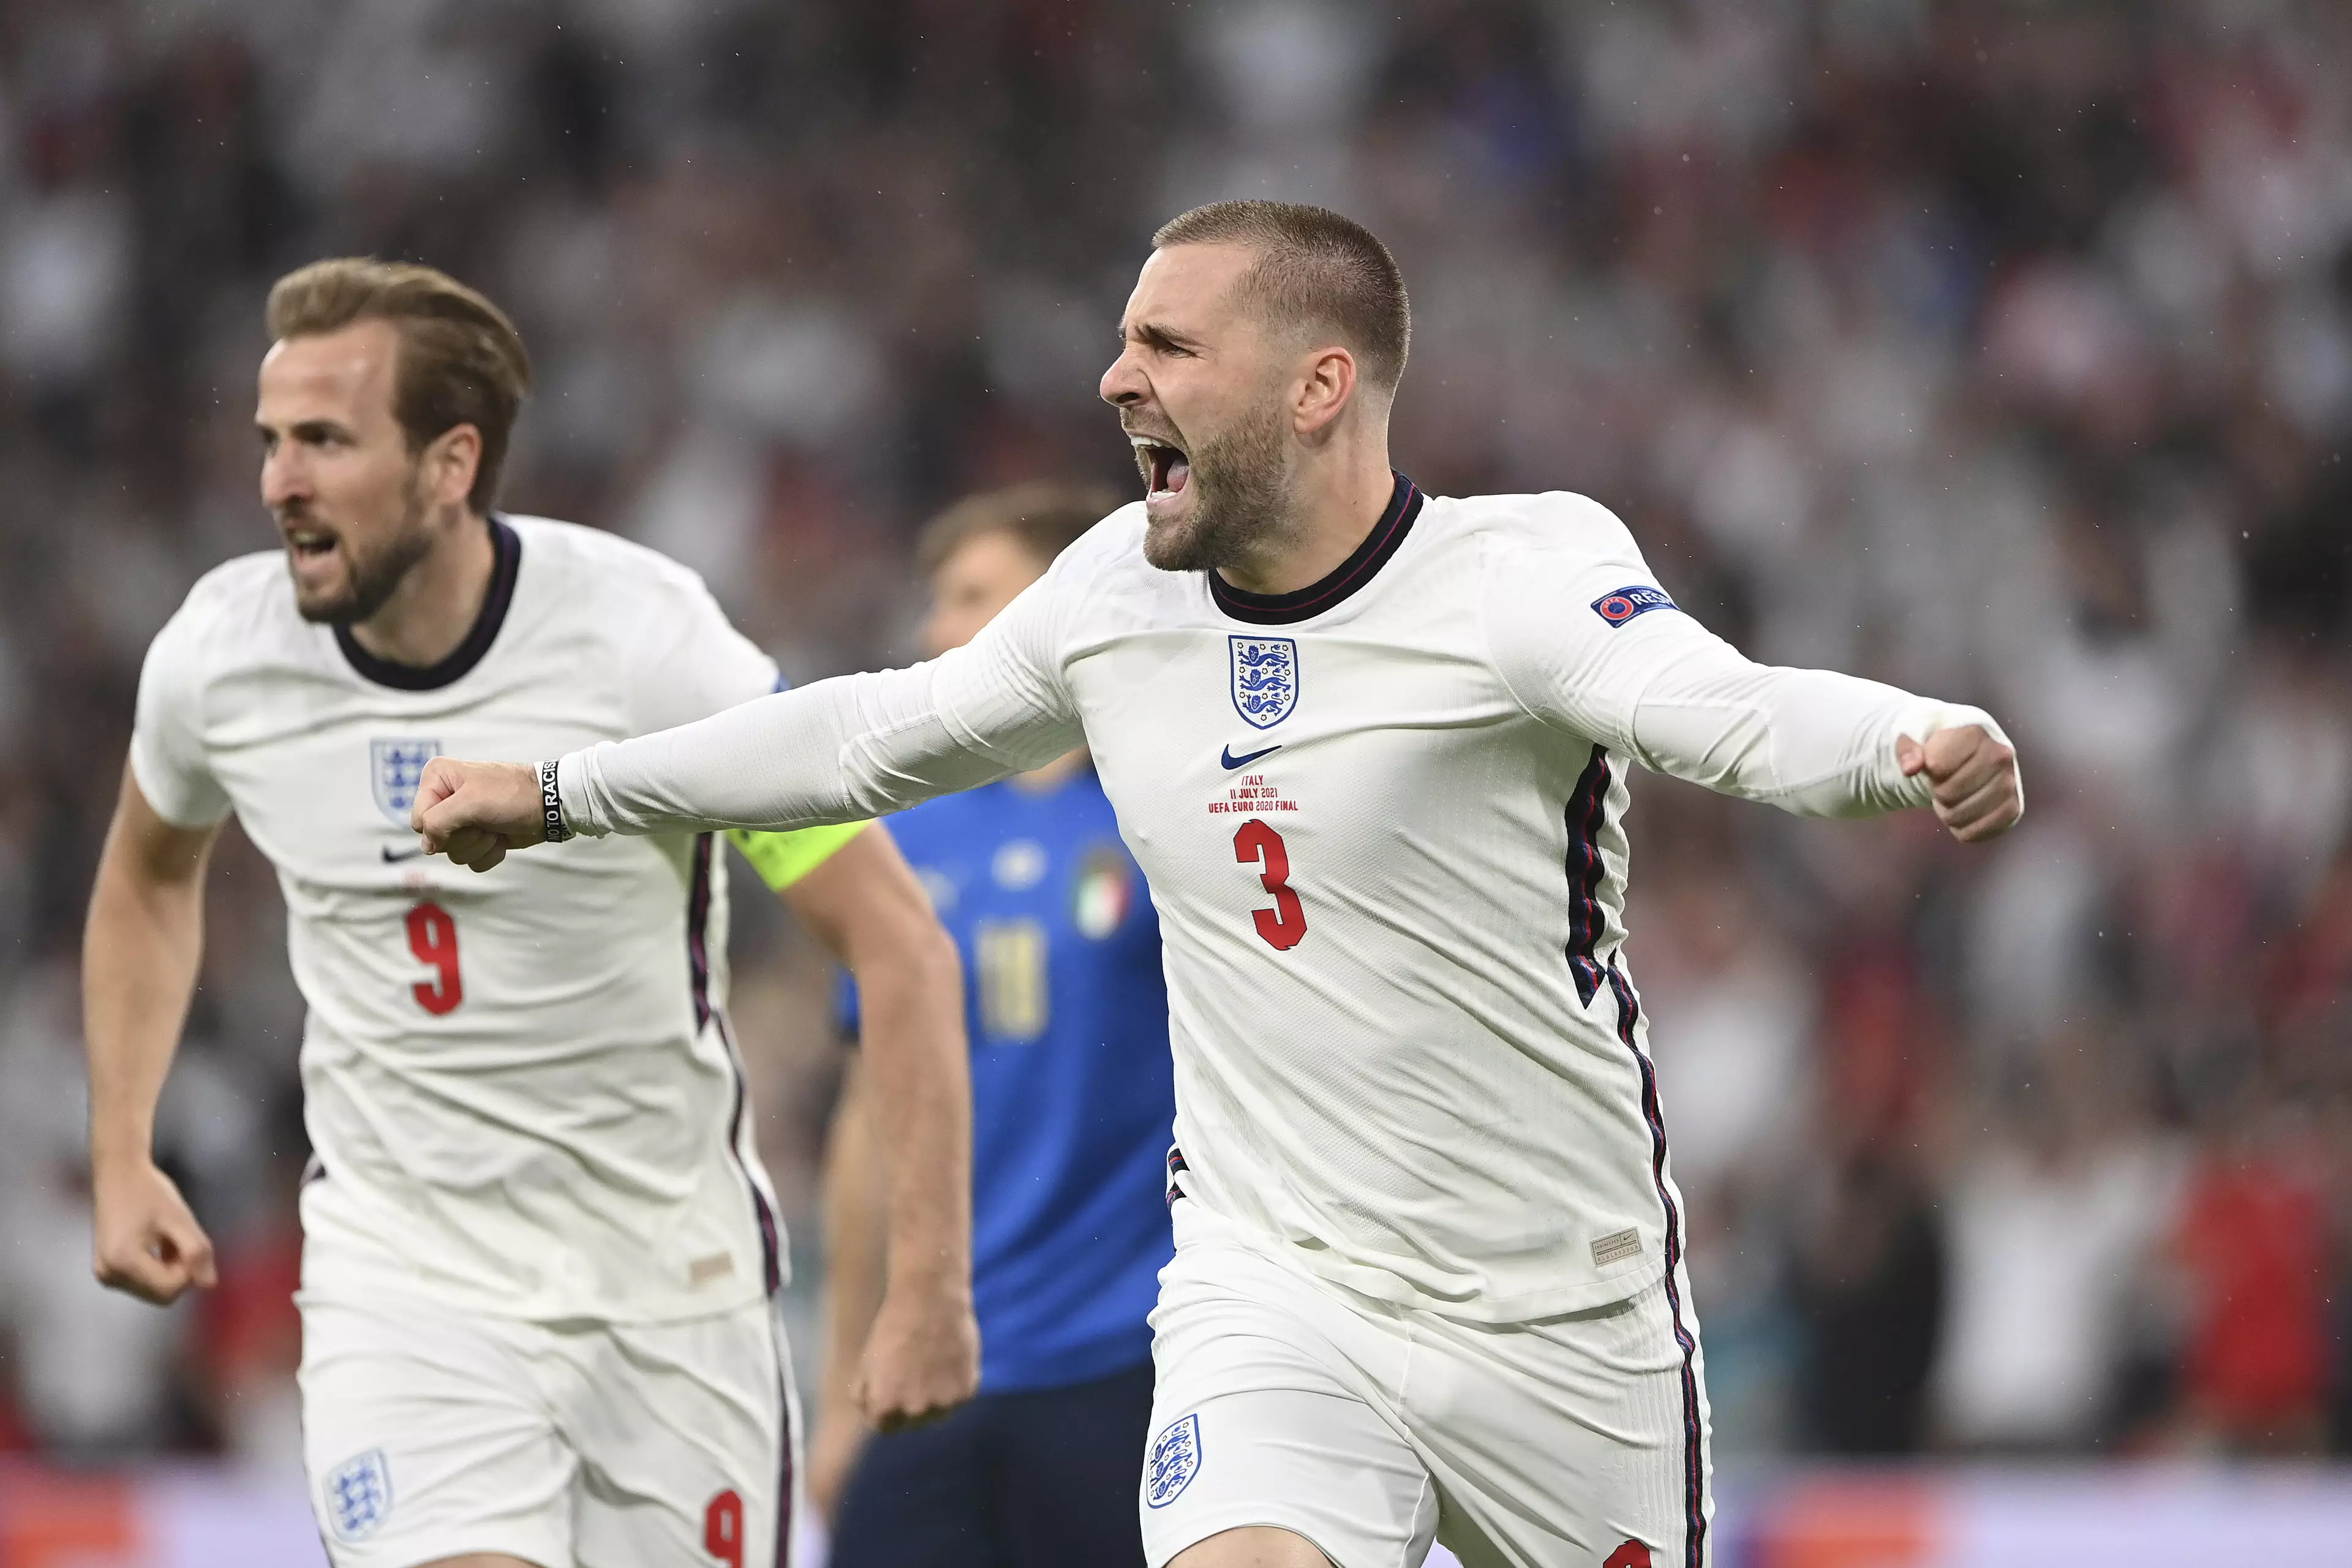 Shaw celebrates scoring during the Euro 2020 final. Image: PA Images